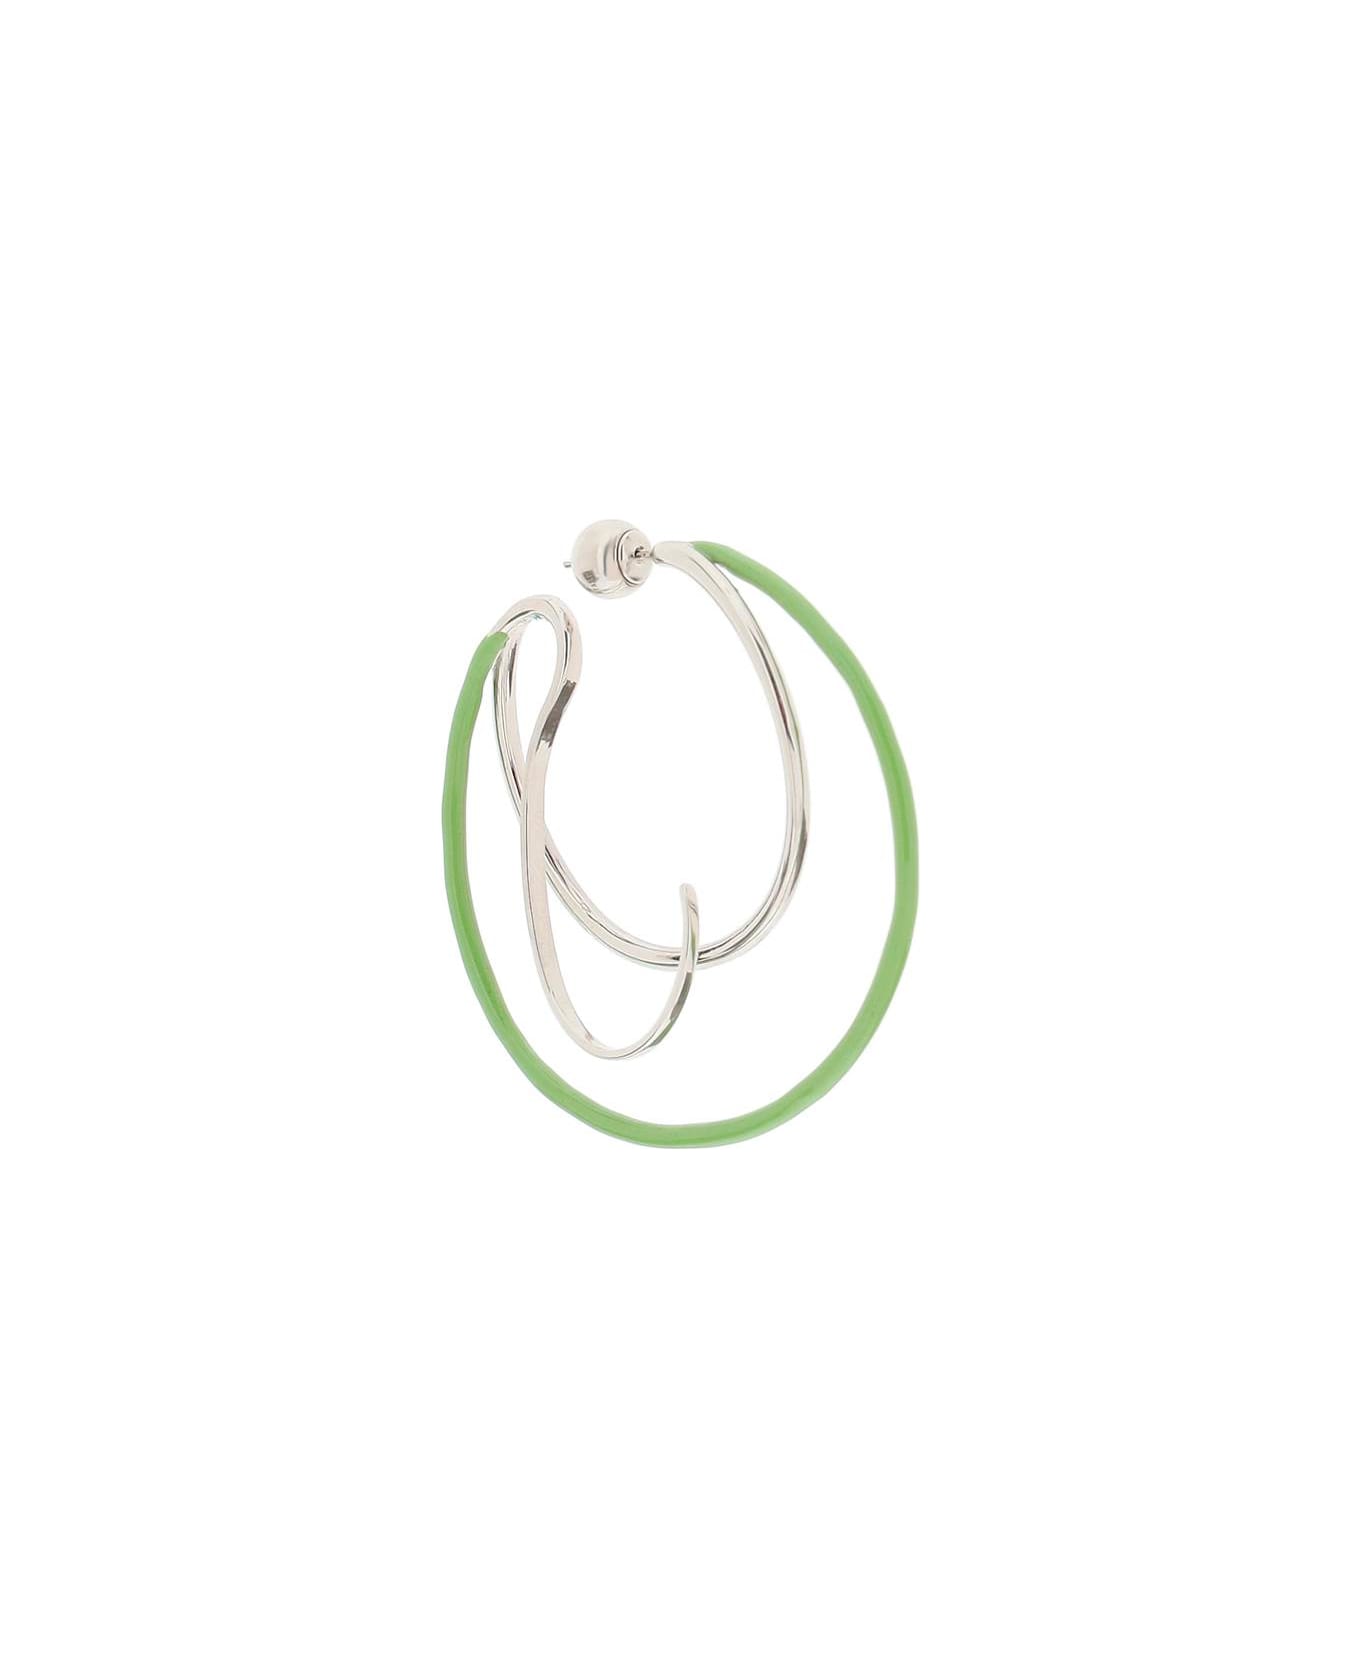 Panconesi 'double Kilter' Earrings - PISTACCHIO (Green) イヤリング